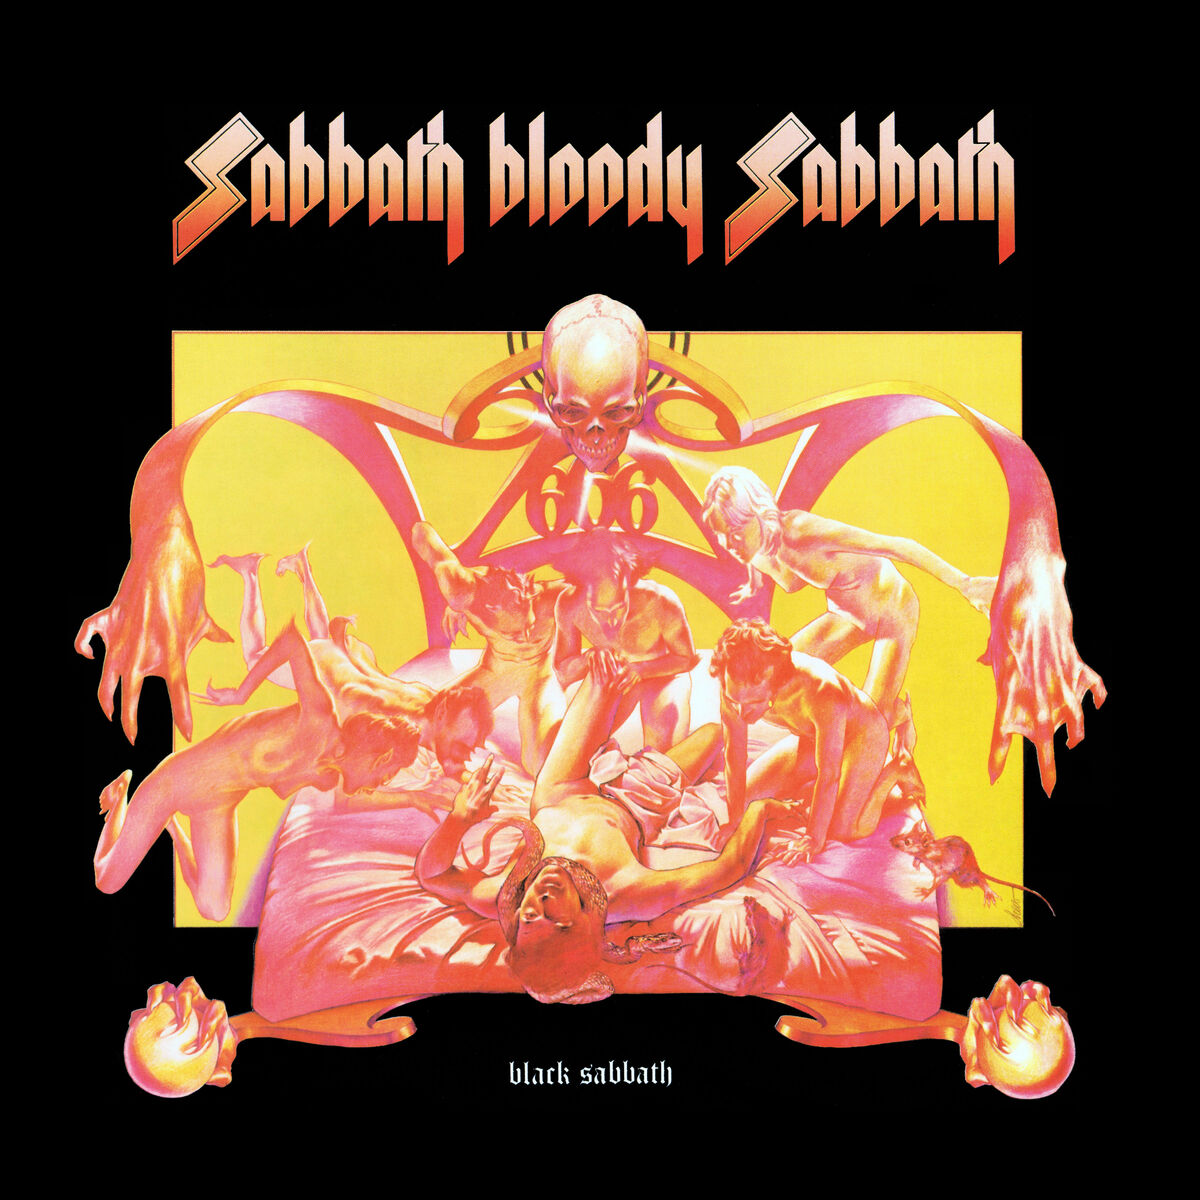 Sabbath Bloody Sabbath - Wikipedia